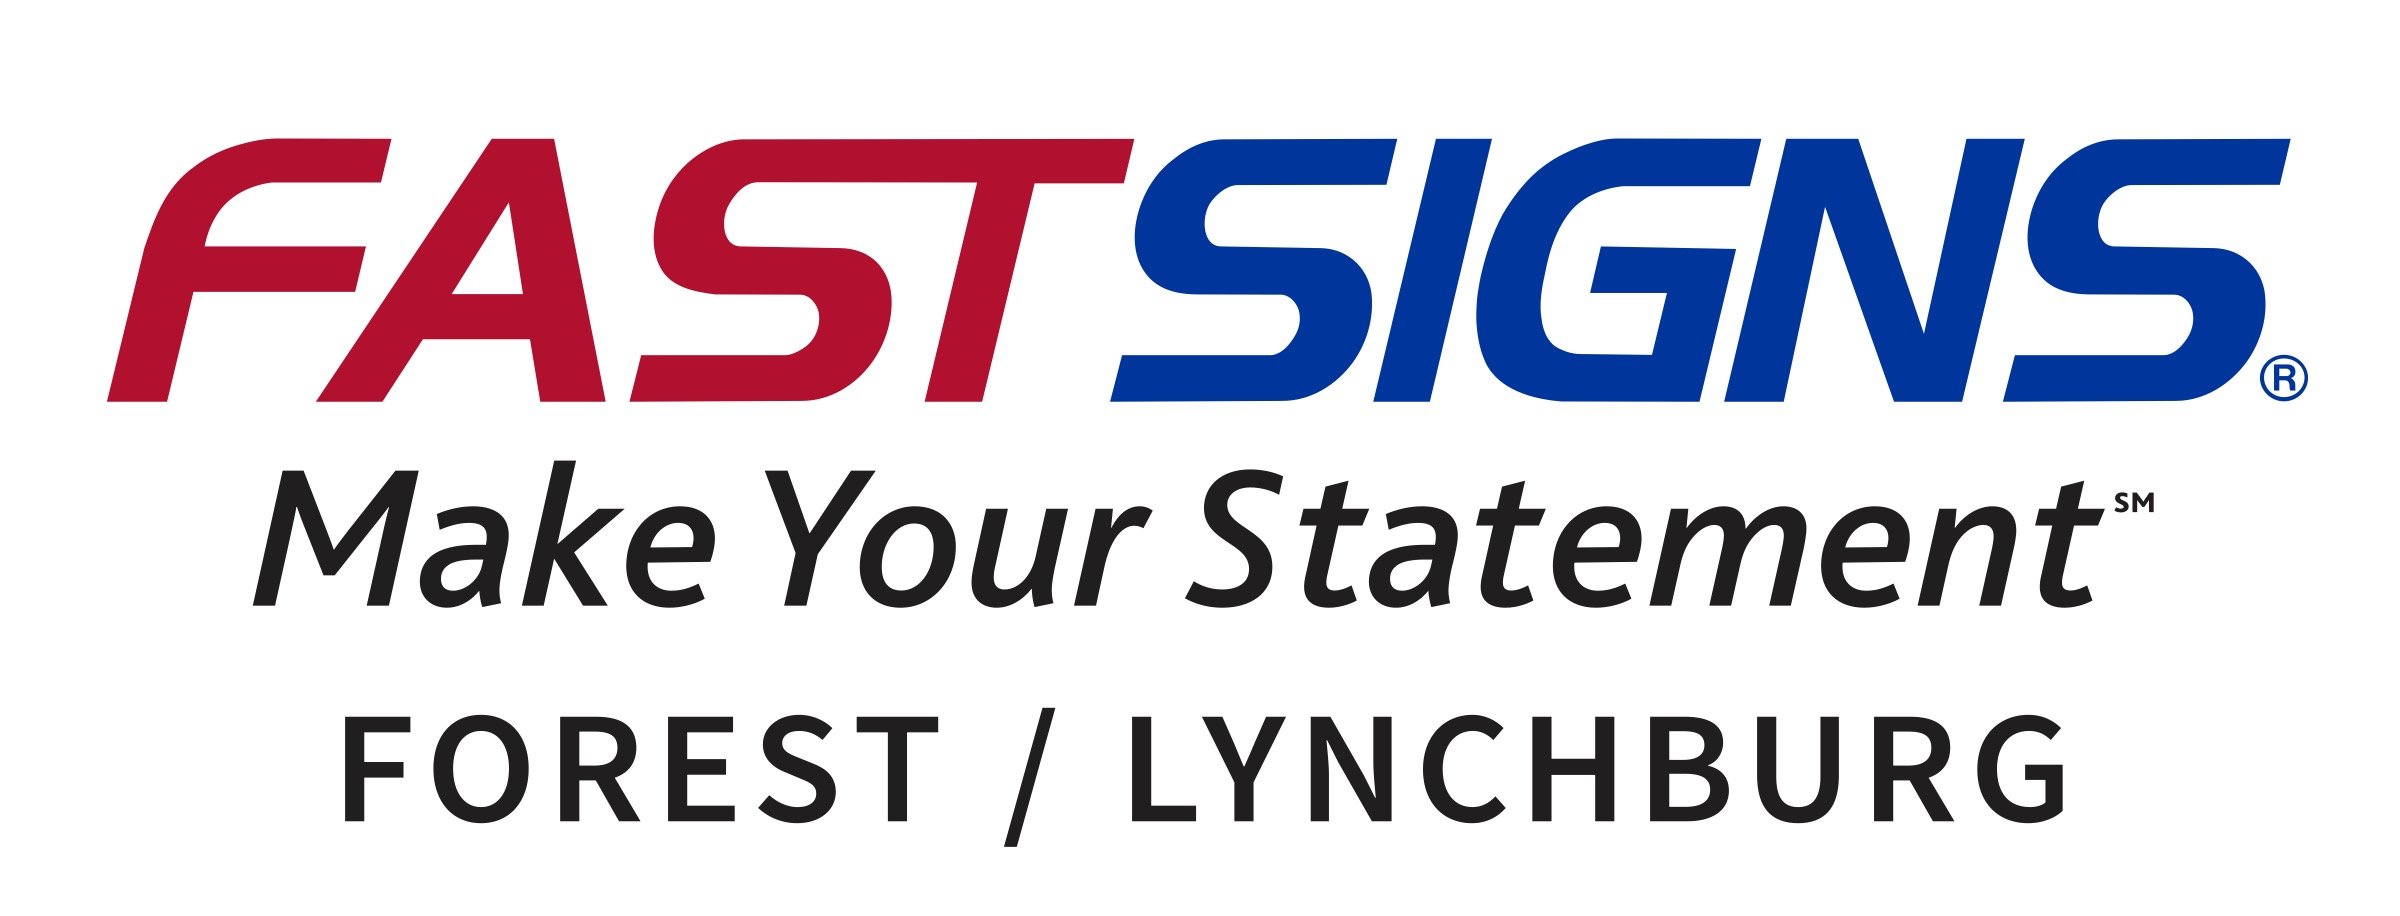 Fastsigns MYS with location 2023 Logo.jpg